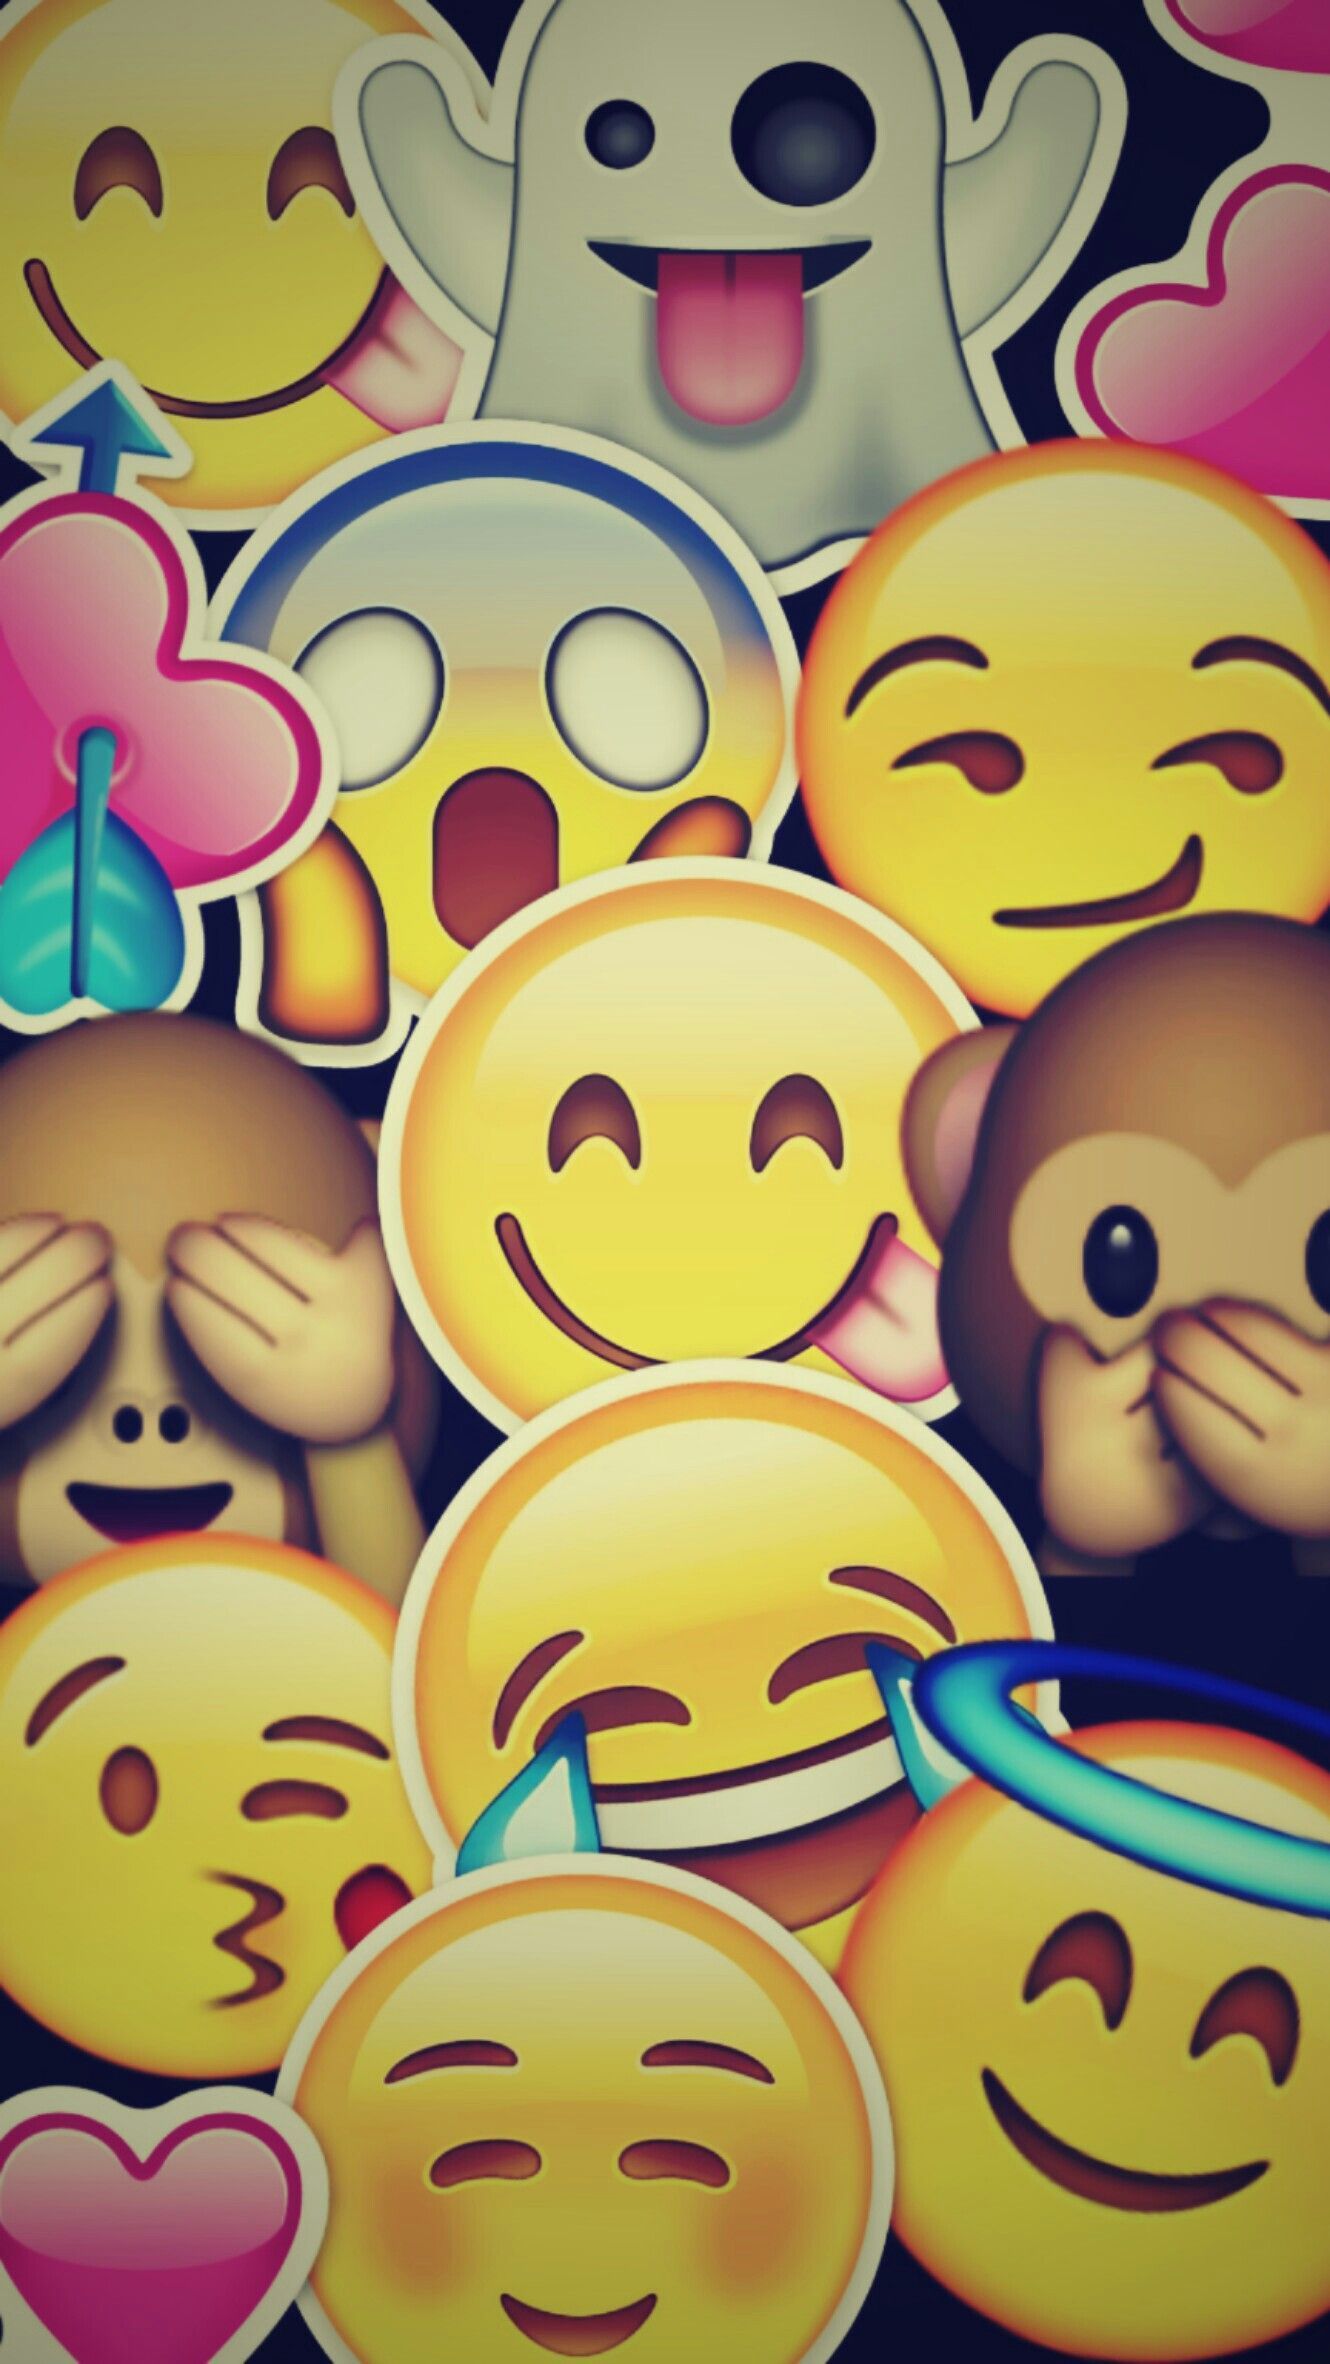 Emoji Background Wallpaper, Free Stock Wallpaper